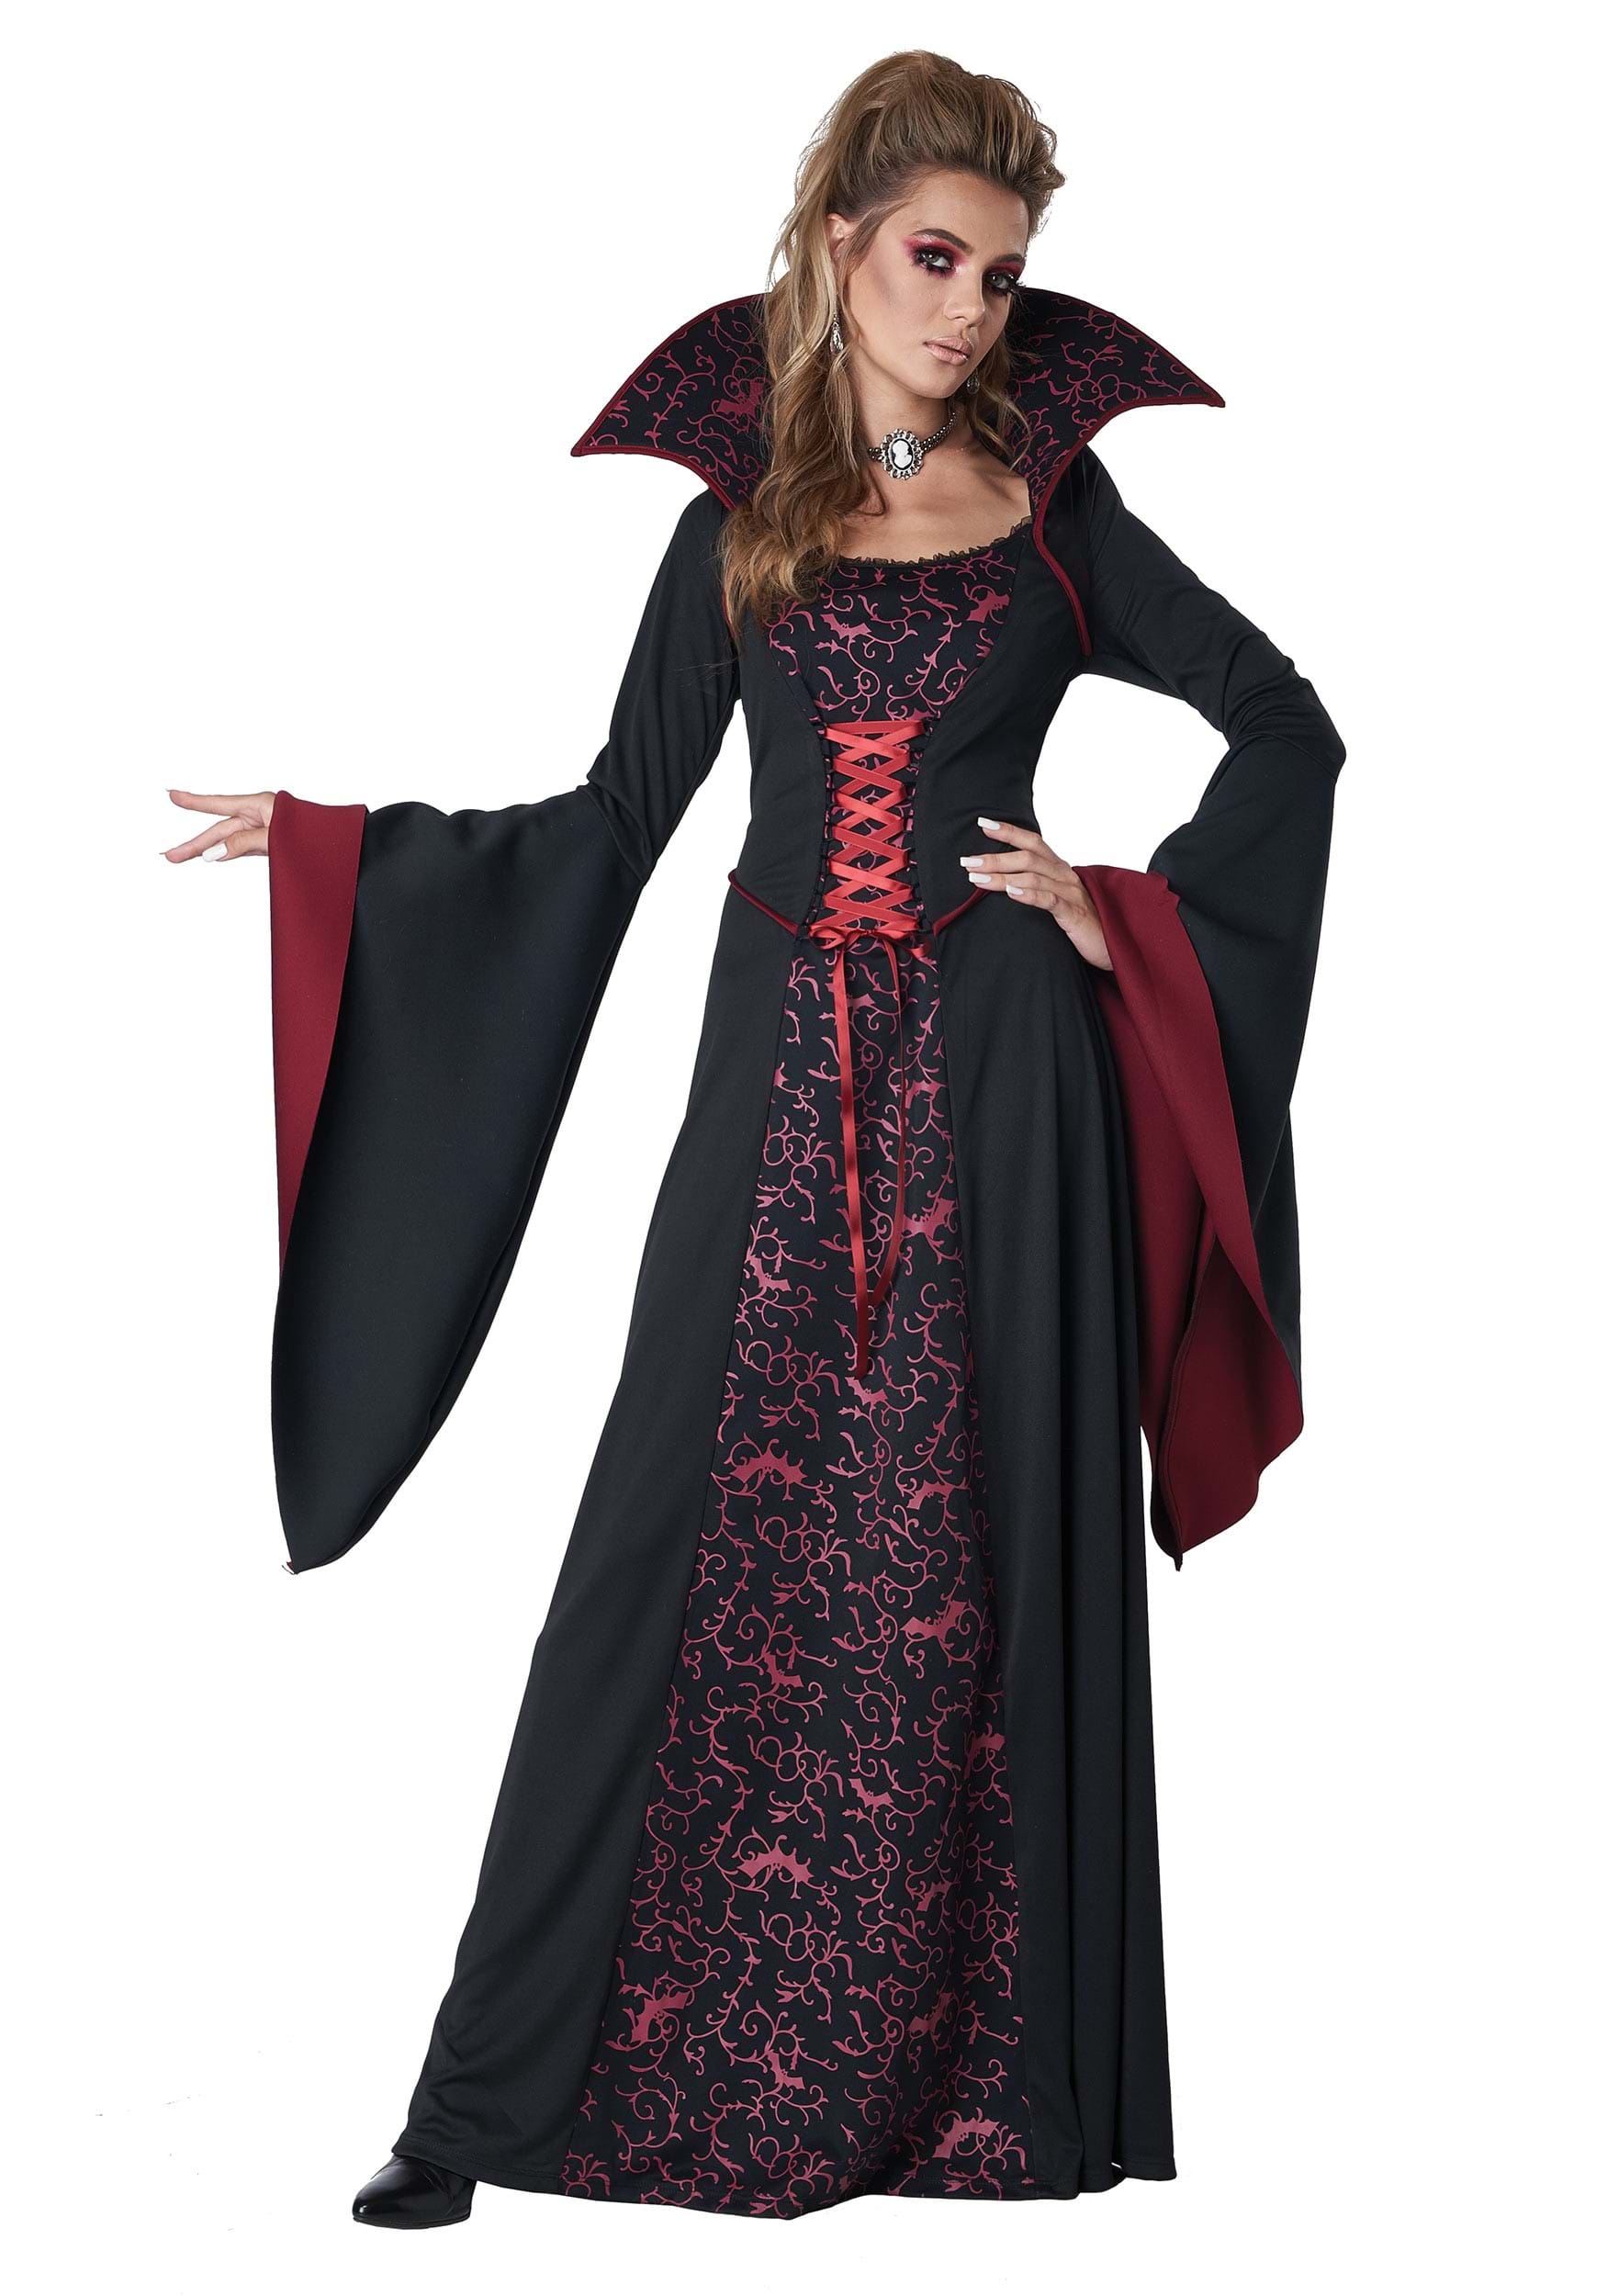 Vampire Costume Women Ideas